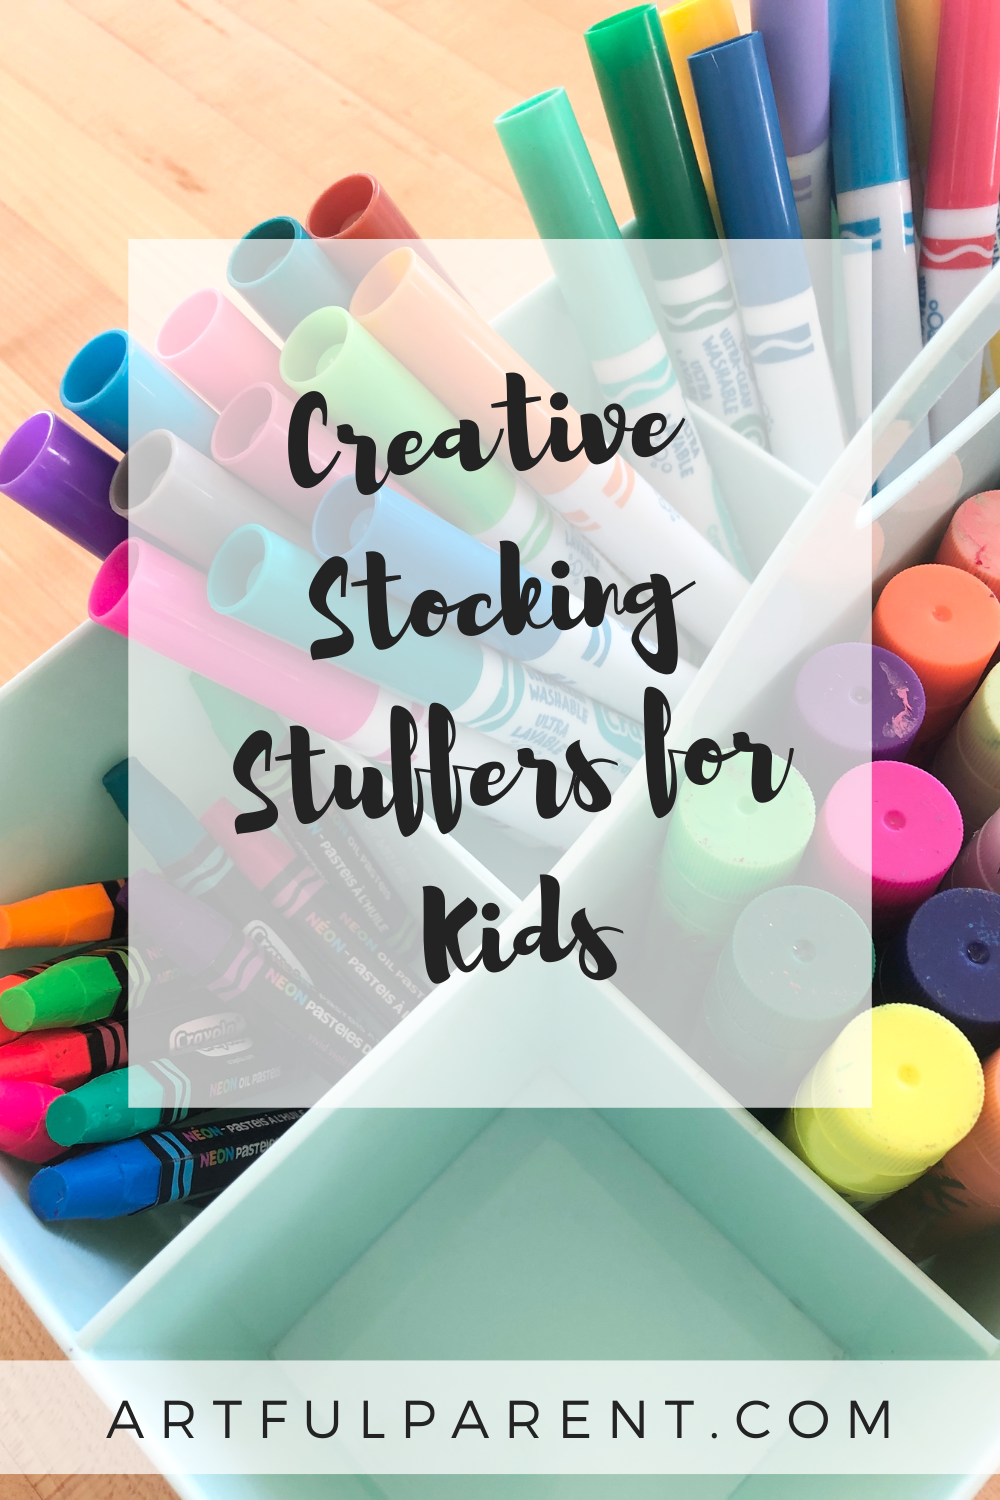 15 Creative Stocking Stuffers for Kids